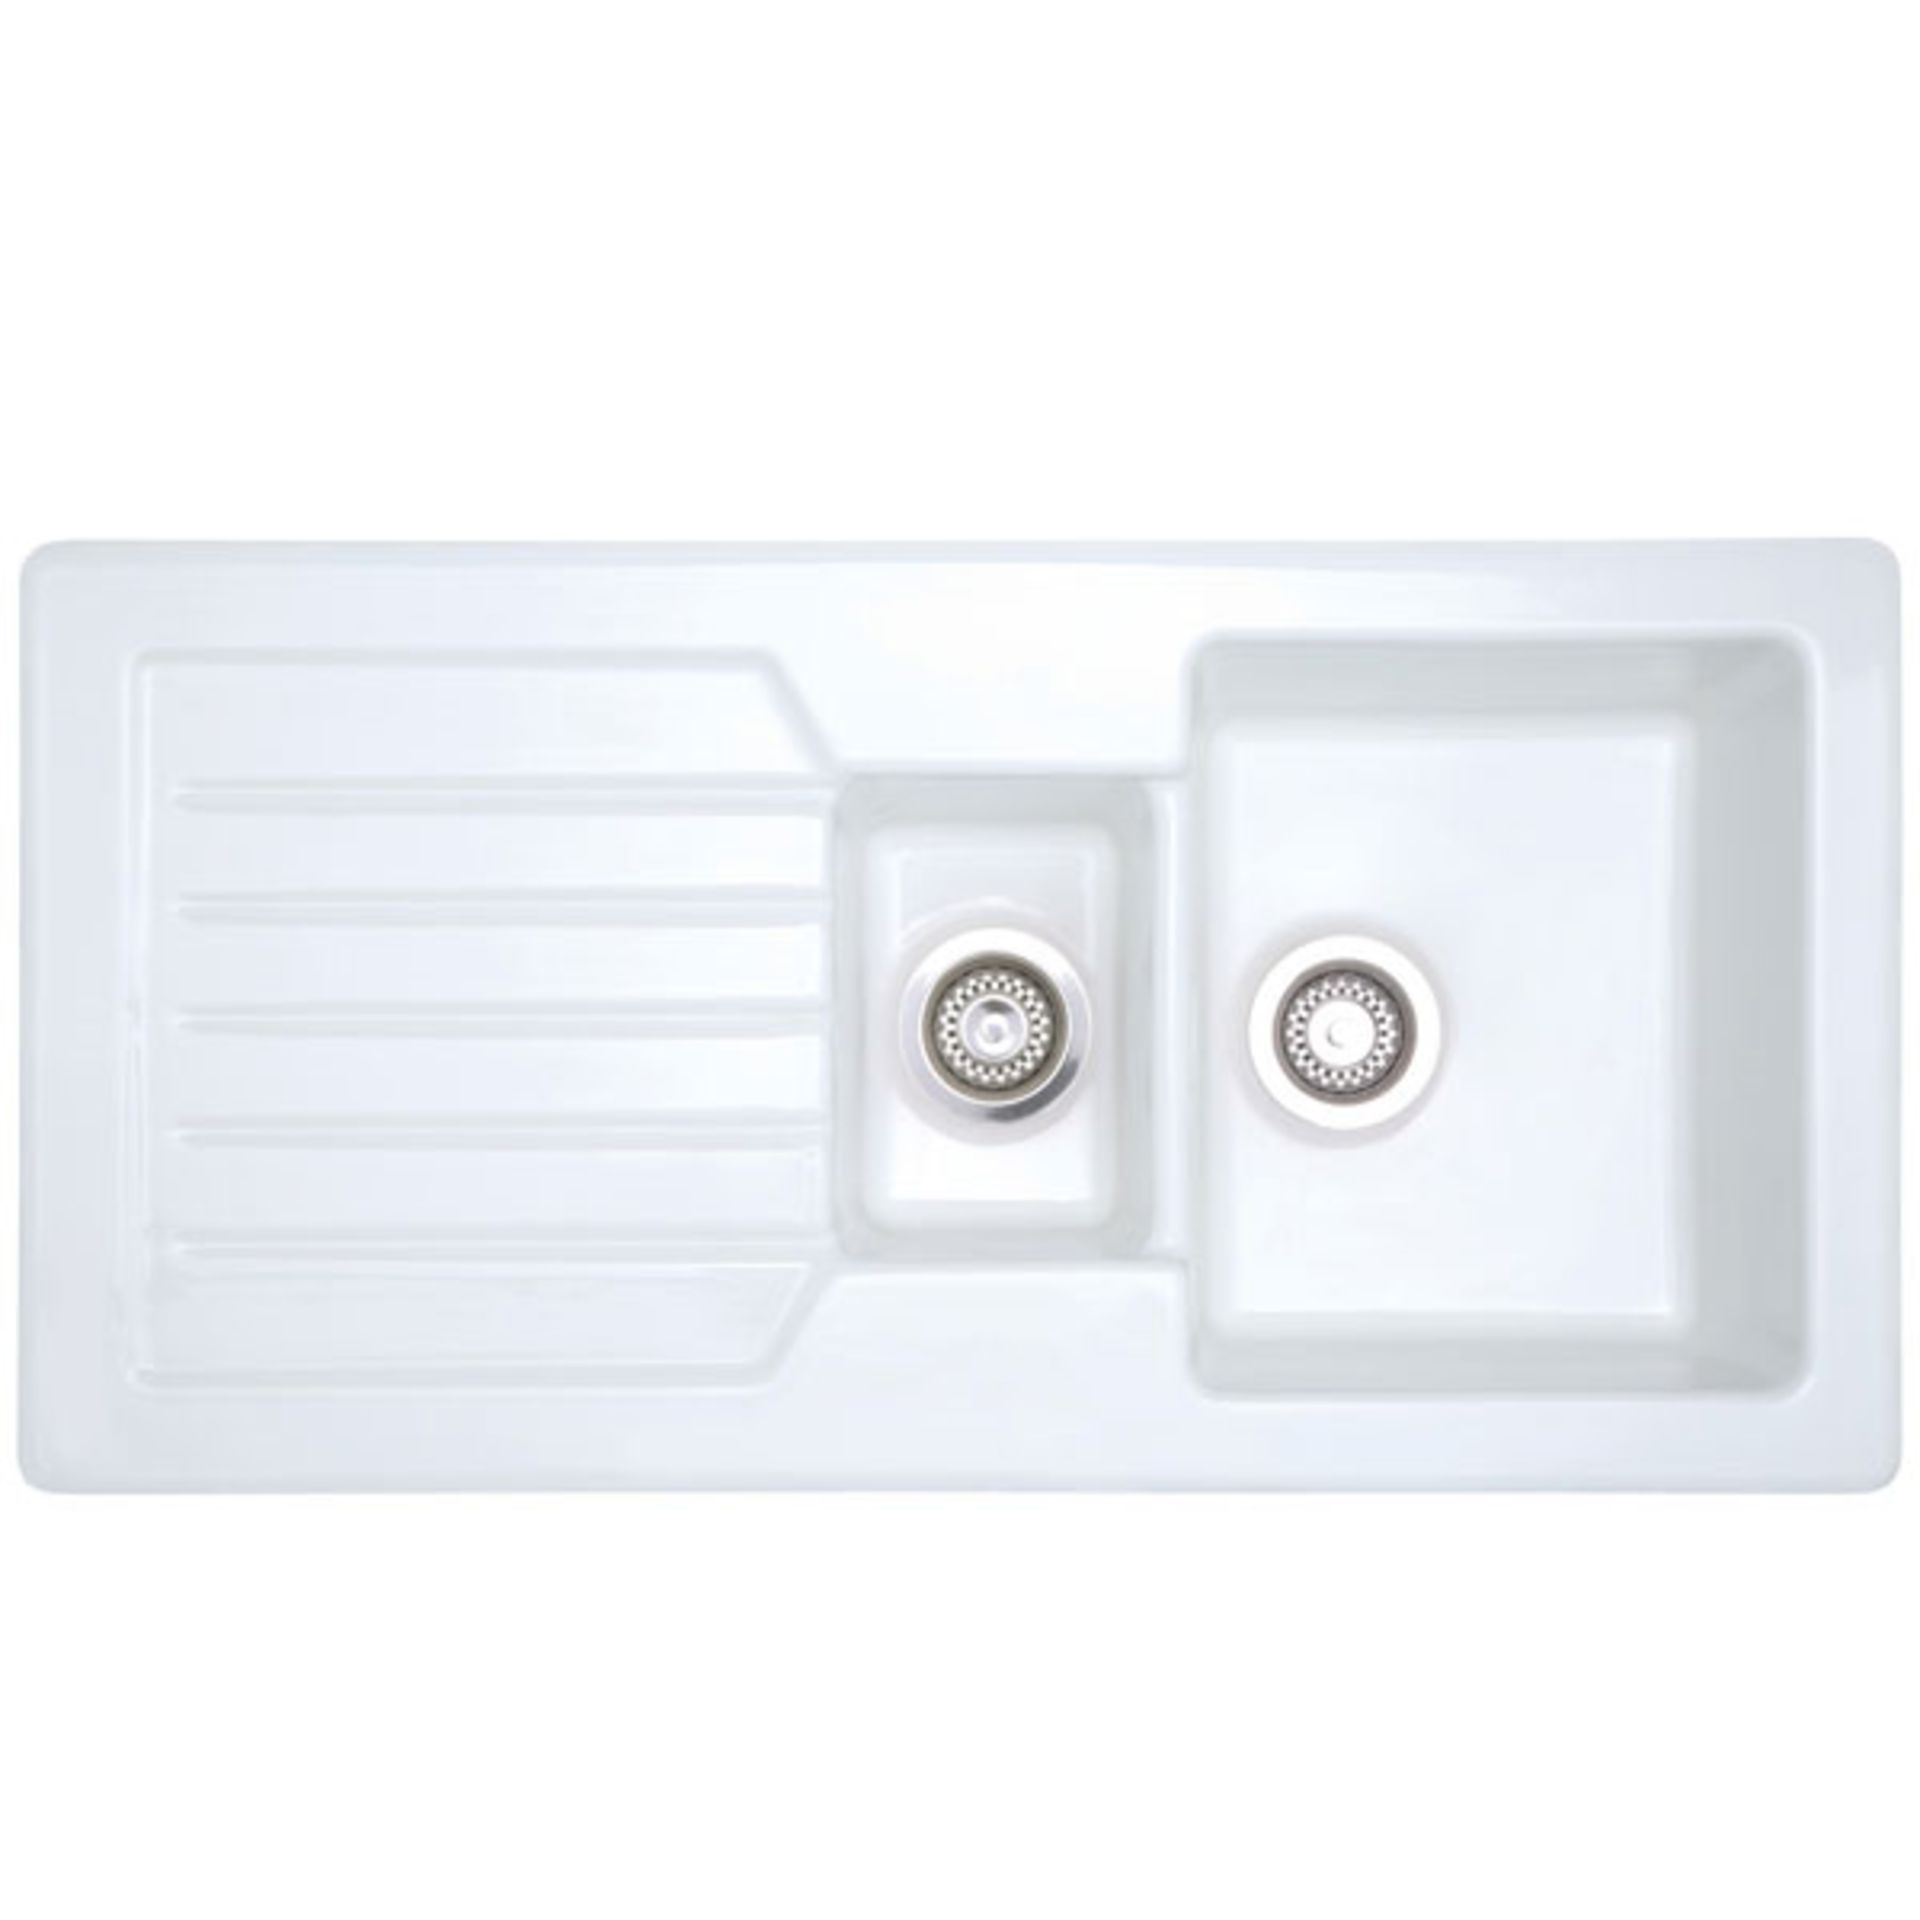 New (E112) Prima 1.5B 1D Reversible Inset Ceramic Sink - White. A Prima 1.5 Bowl Inset Sink In ...